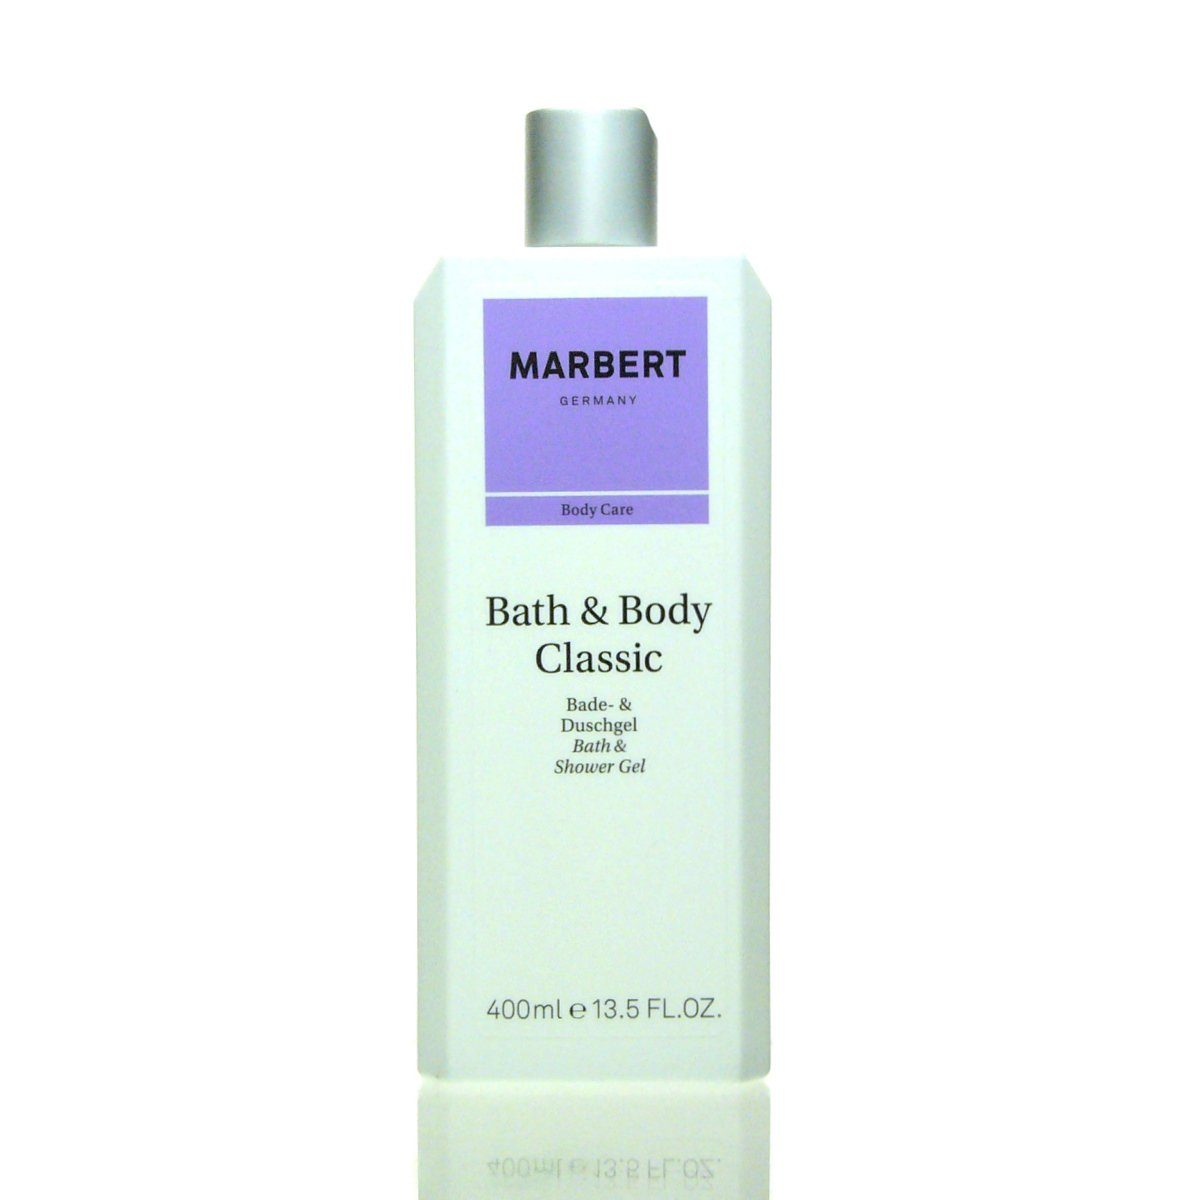 Marbert 400 ml & Marbert Classic Gel Bath Duschpflege Body Bath & Shower